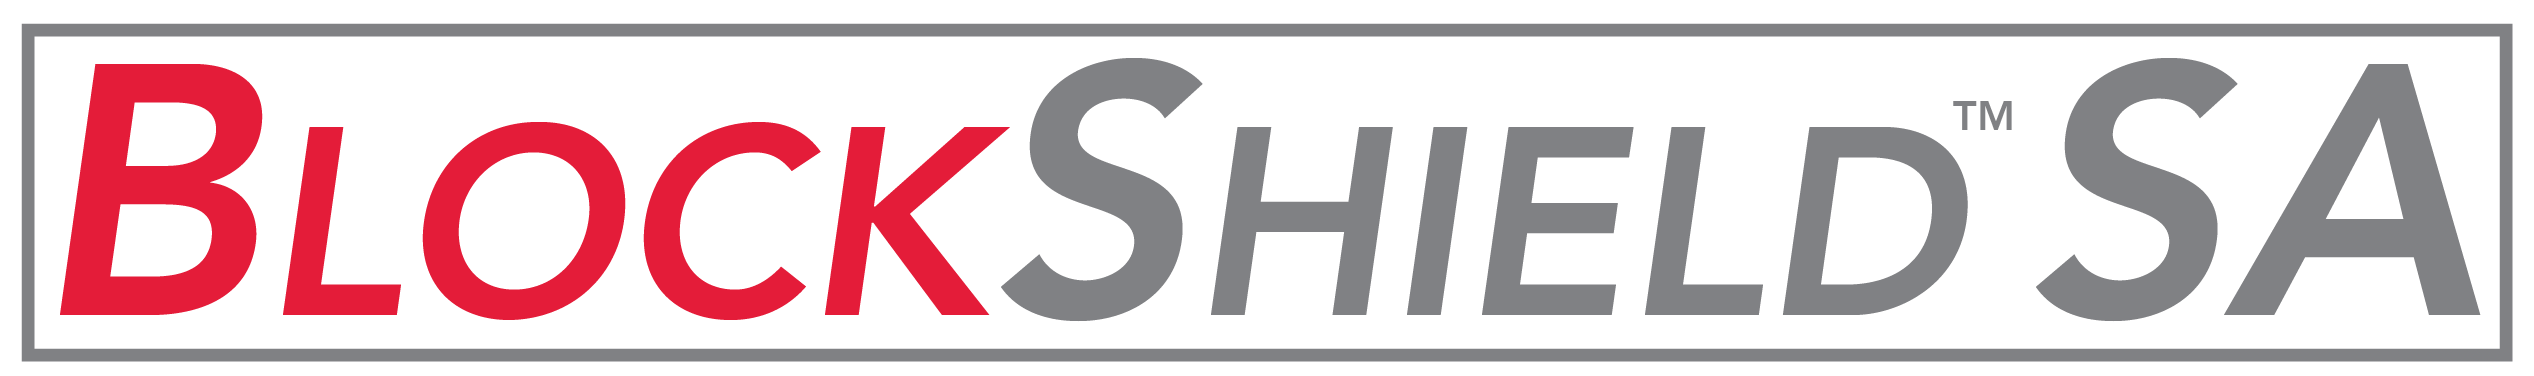 BlockShield SA Logo HighRes 01